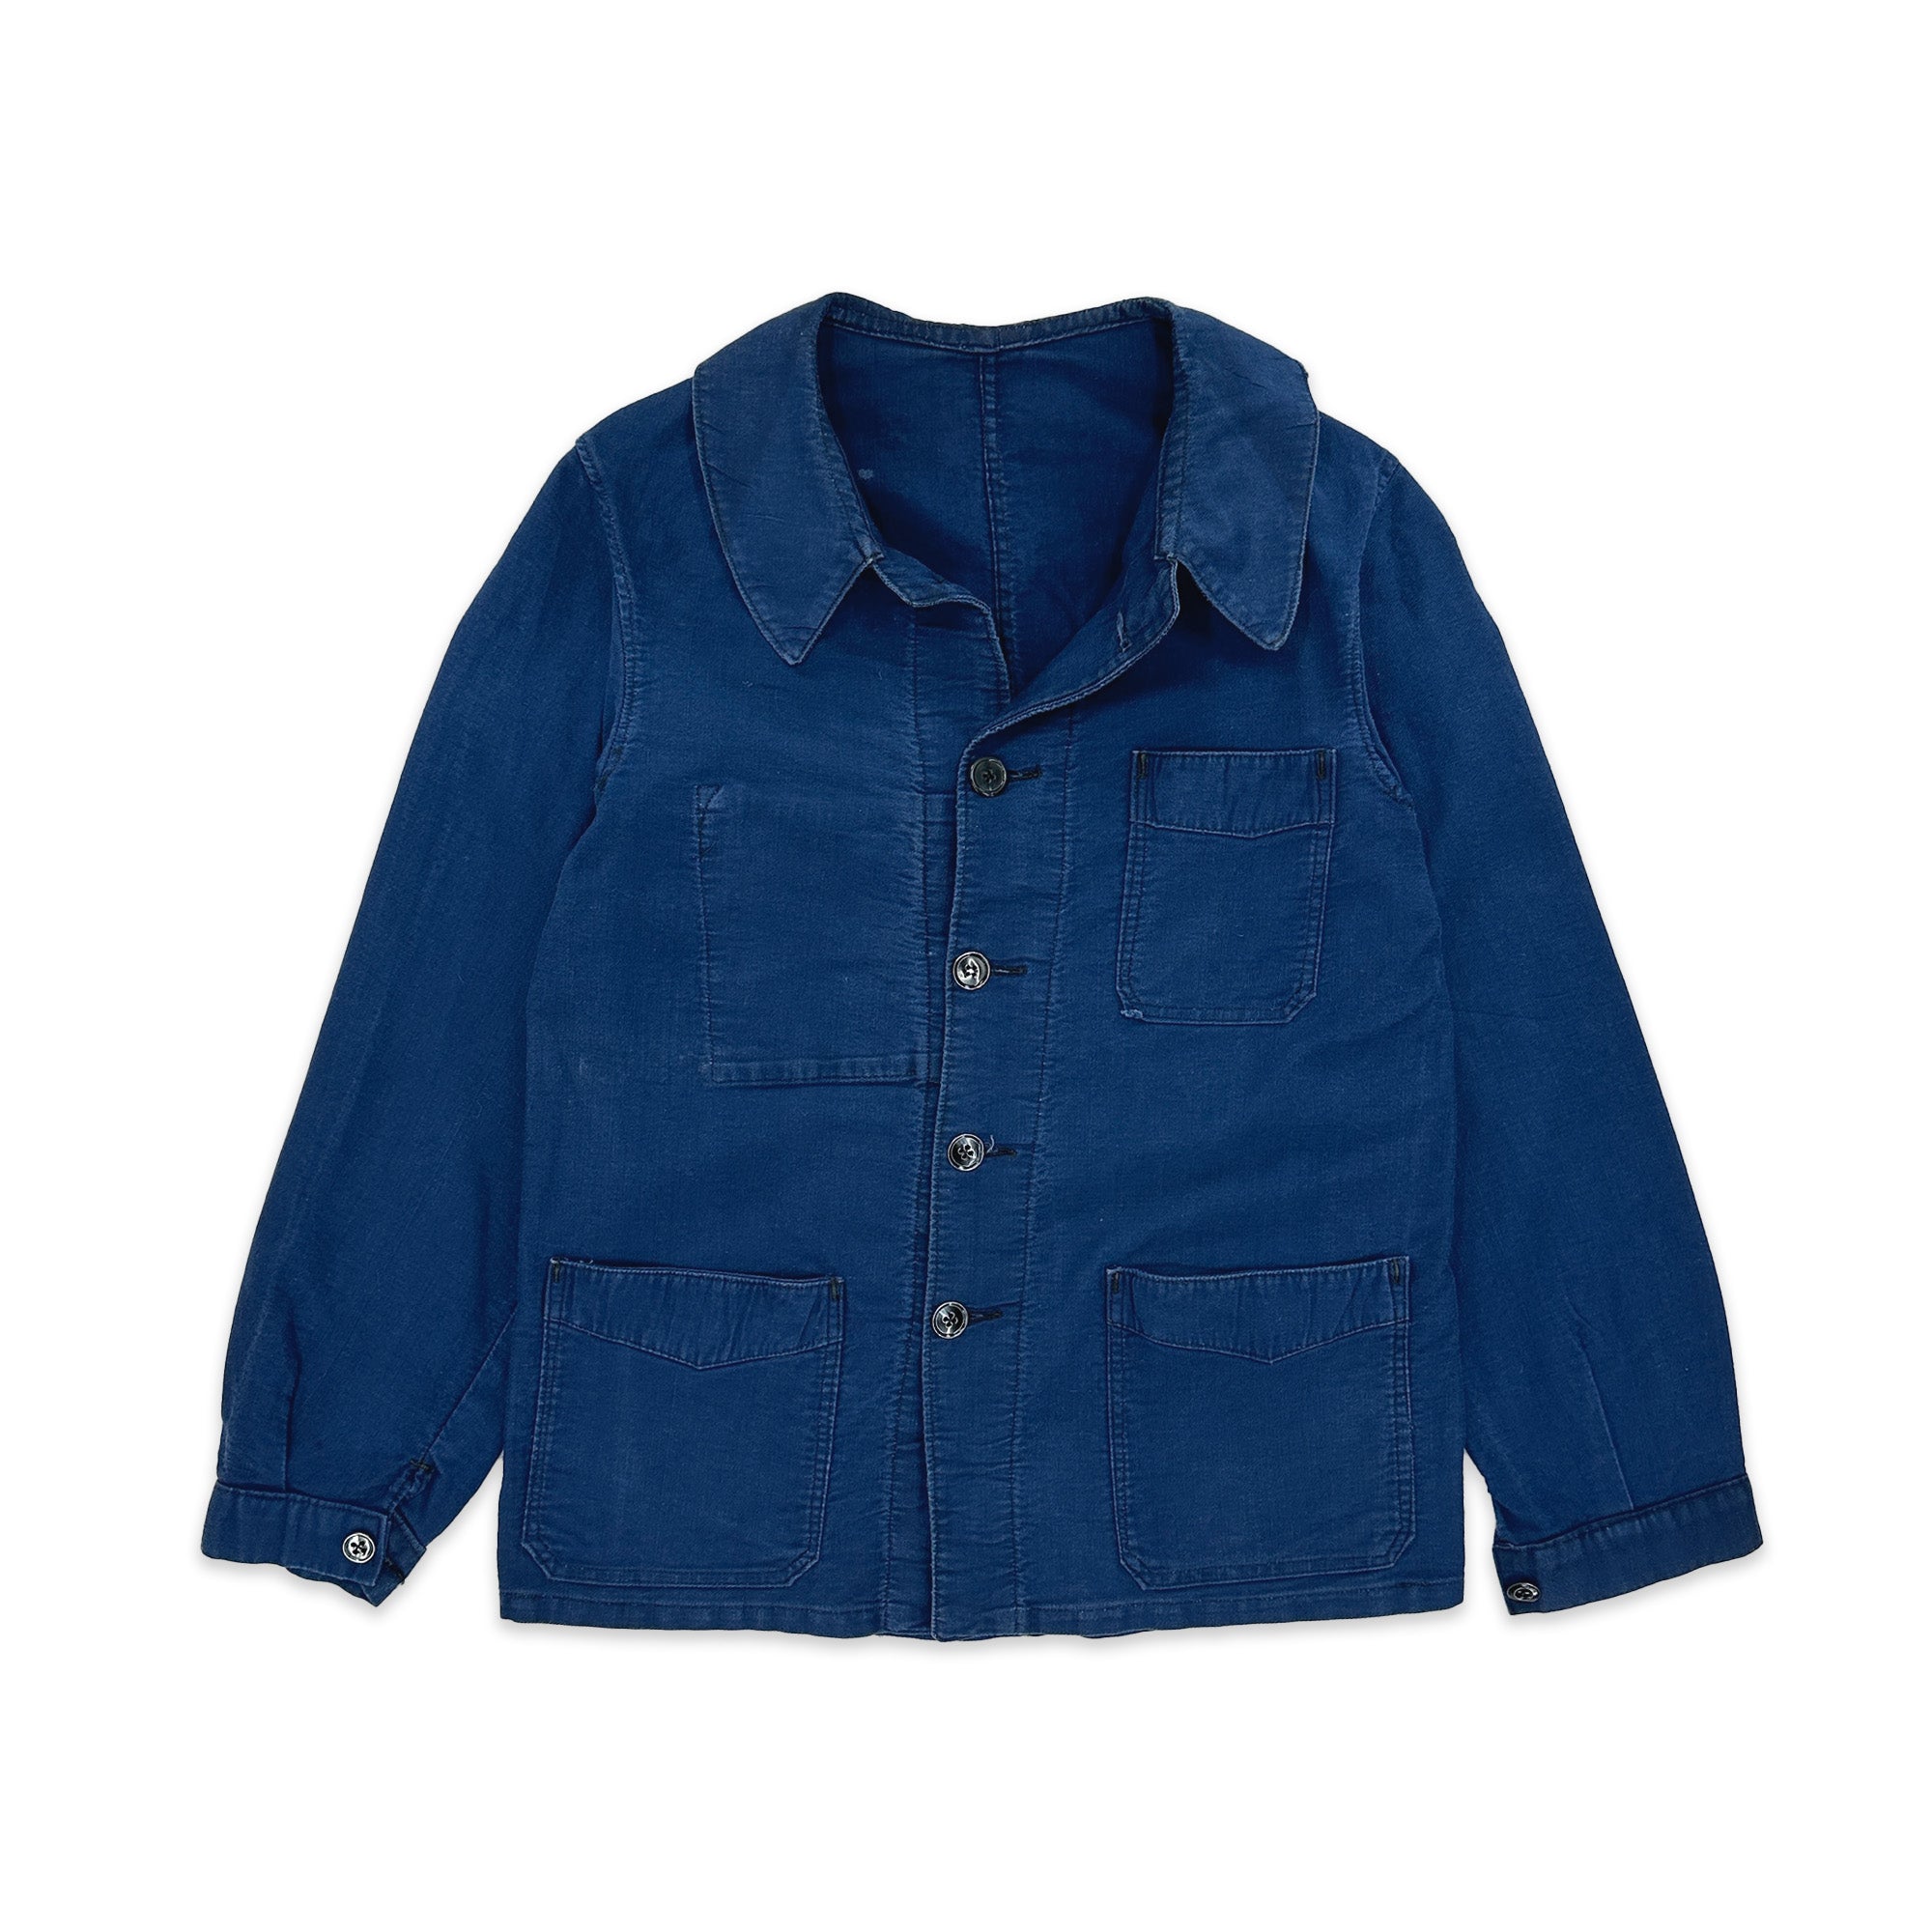 Vintage Bleu de Travail French Work Jacket - Women's Small Great Lakes Reclaimed Denim